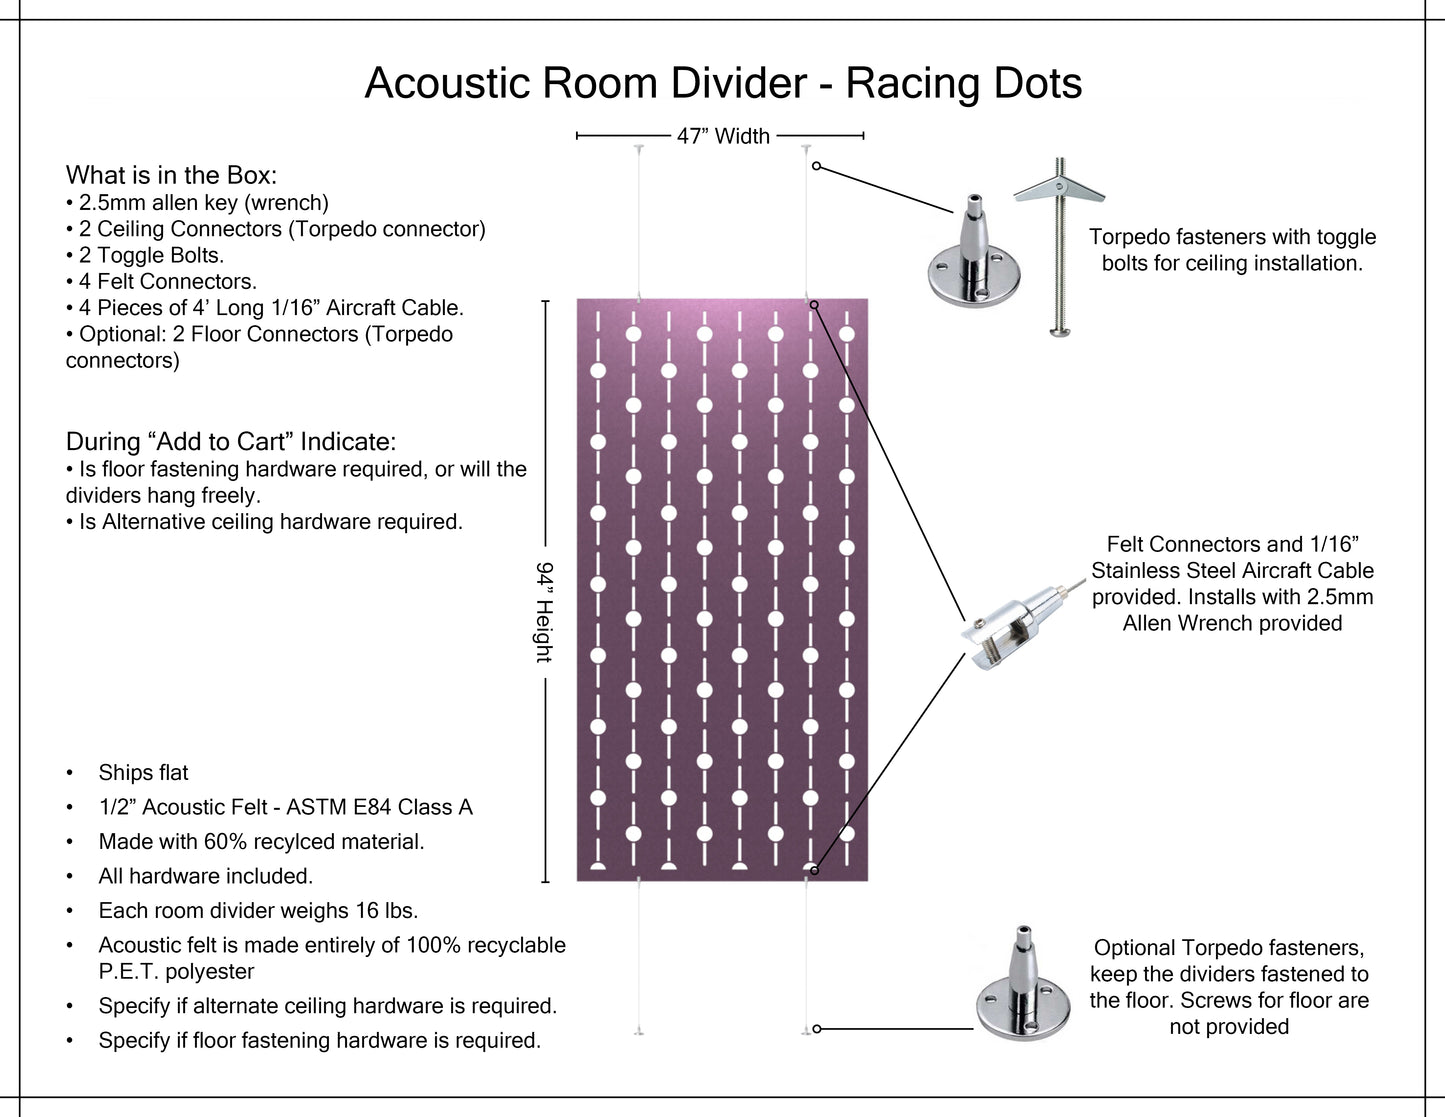 4x8 Acoustic Room Divider - Racing Dots